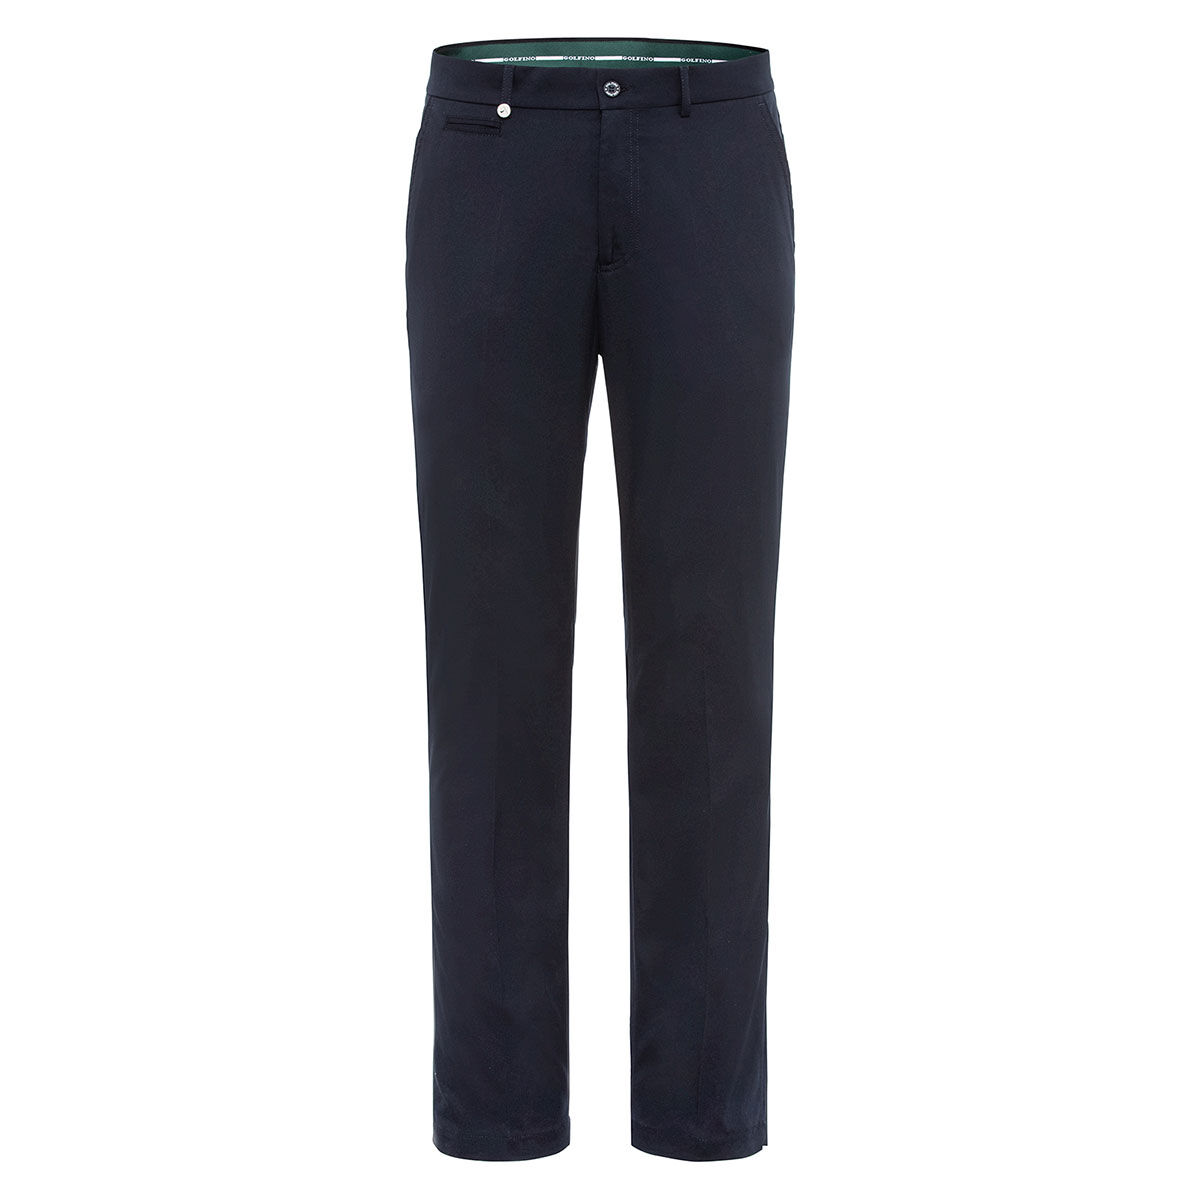 GOLFINO Men’s Navy Blue Comfortable Downswing Golf Trousers, Size: 30 | American Golf